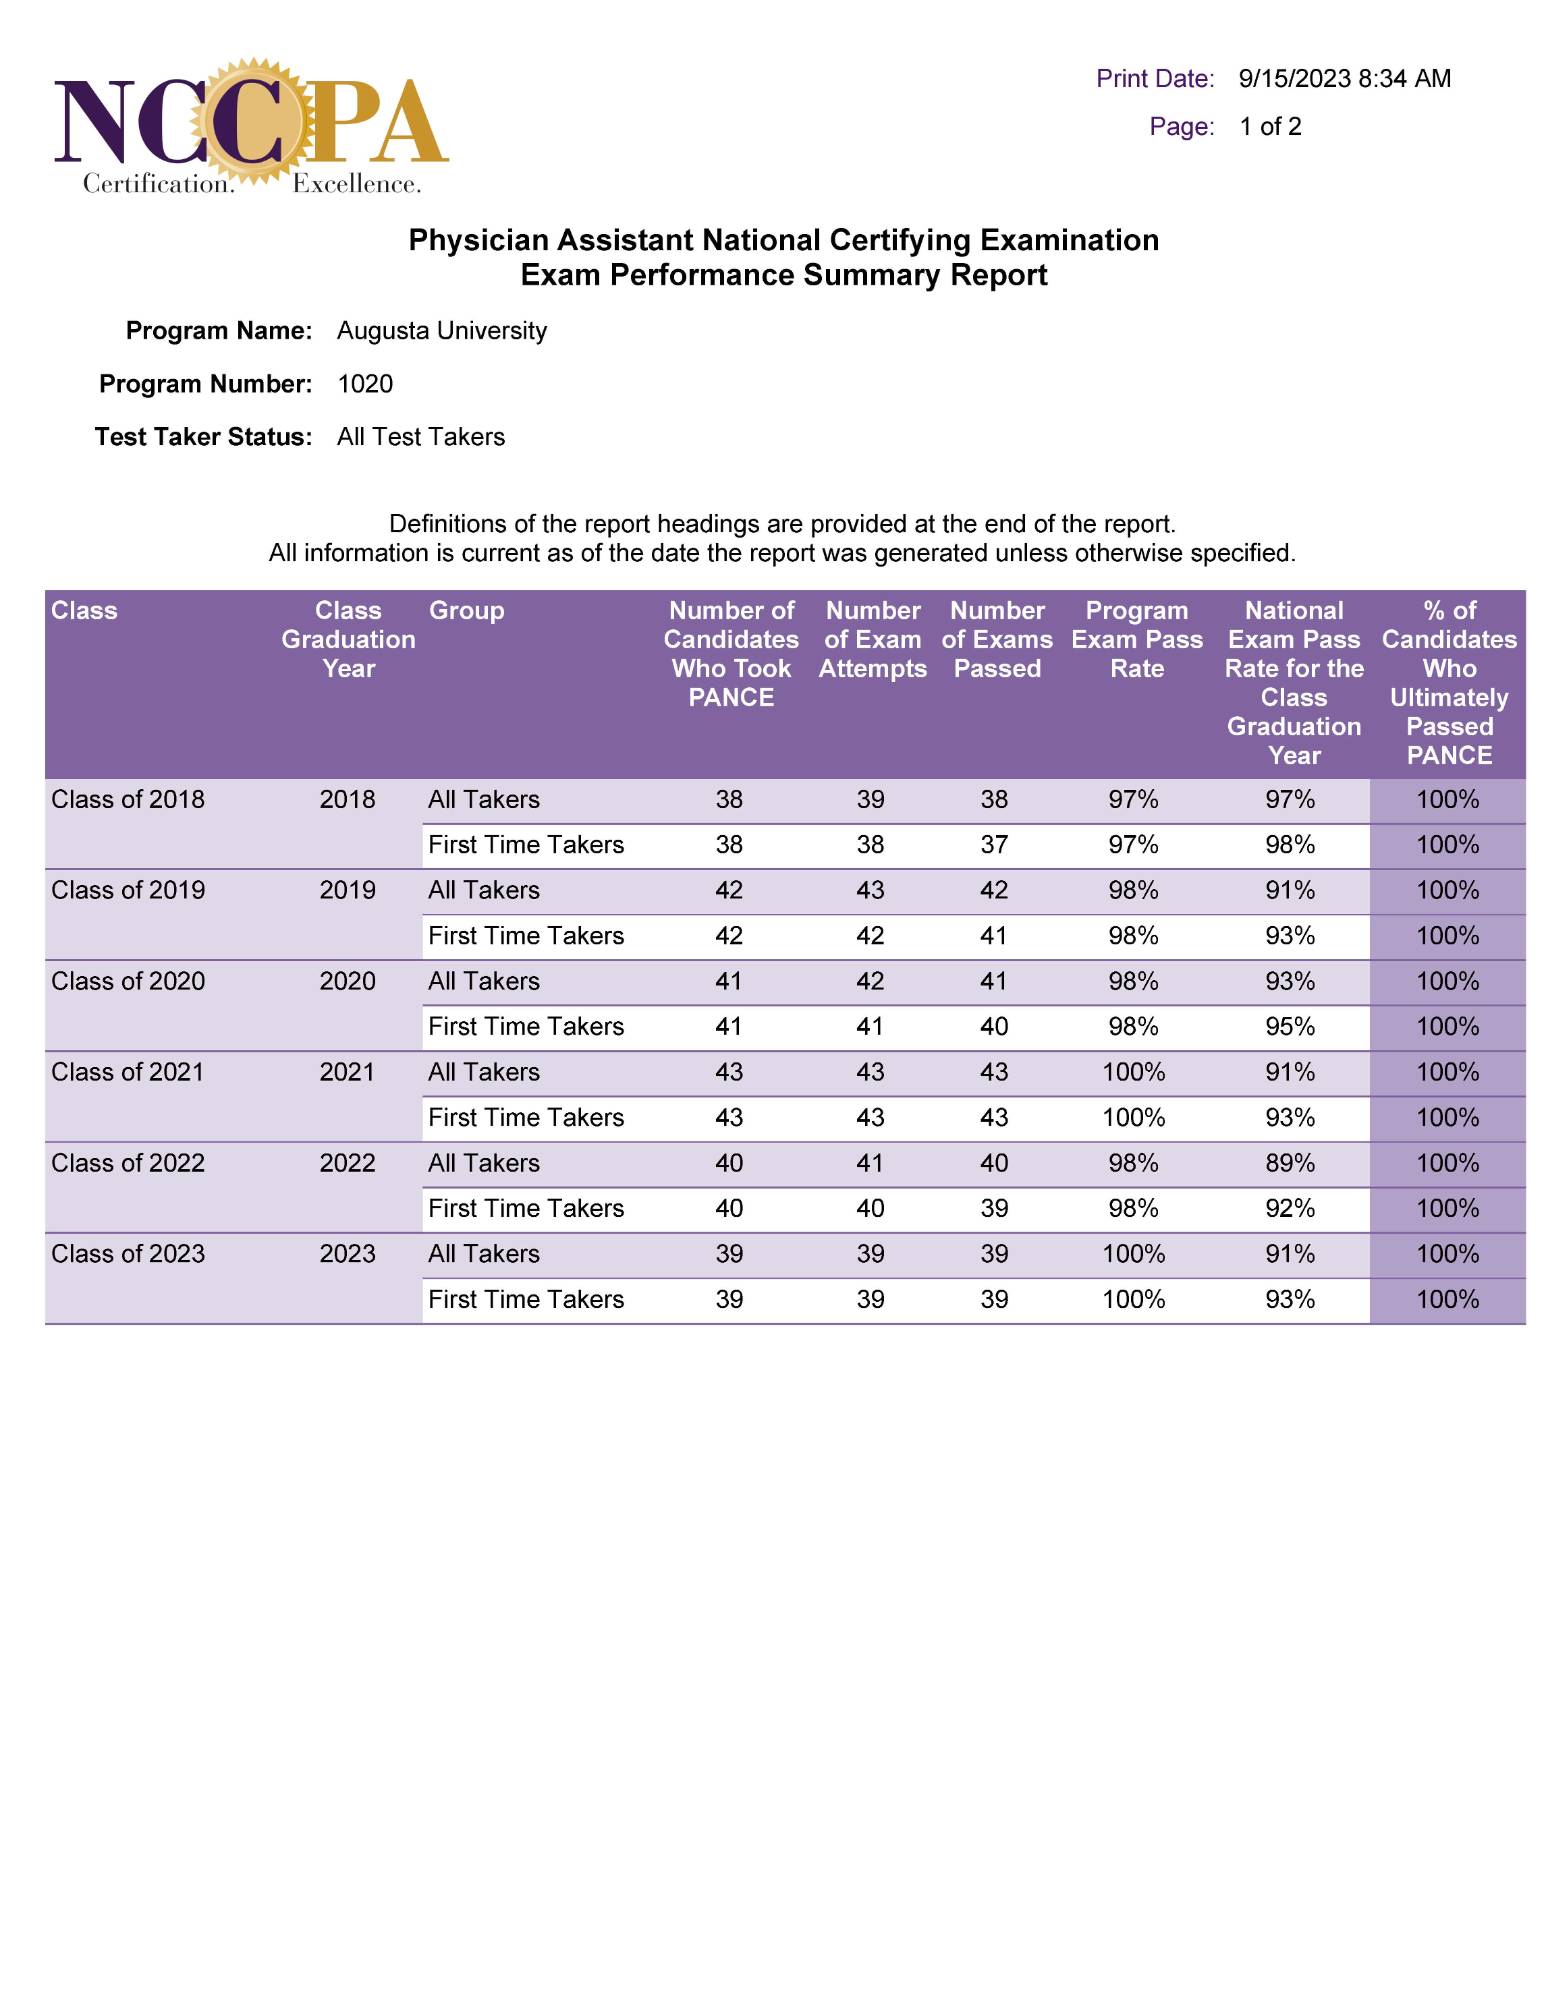 NCCPA Program Exam Performance Summary Report